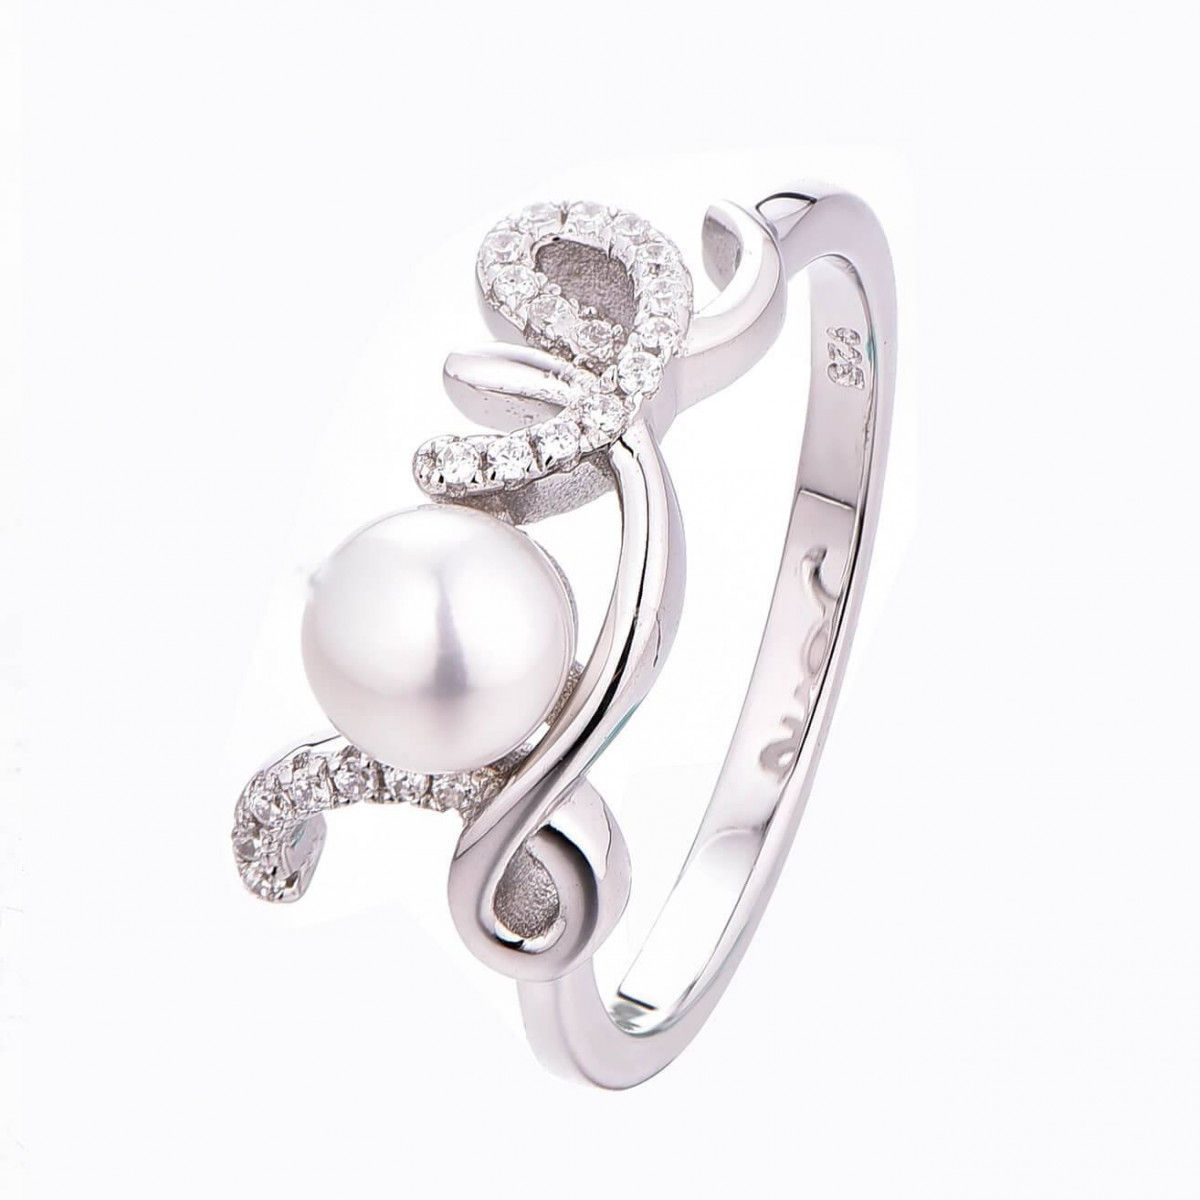 Sophisticated Red Stone Diamond Ring For Men, सोने का पानी चढ़ी हुई अंगूठी  - Soni Fashion, Rajkot | ID: 2851111033097